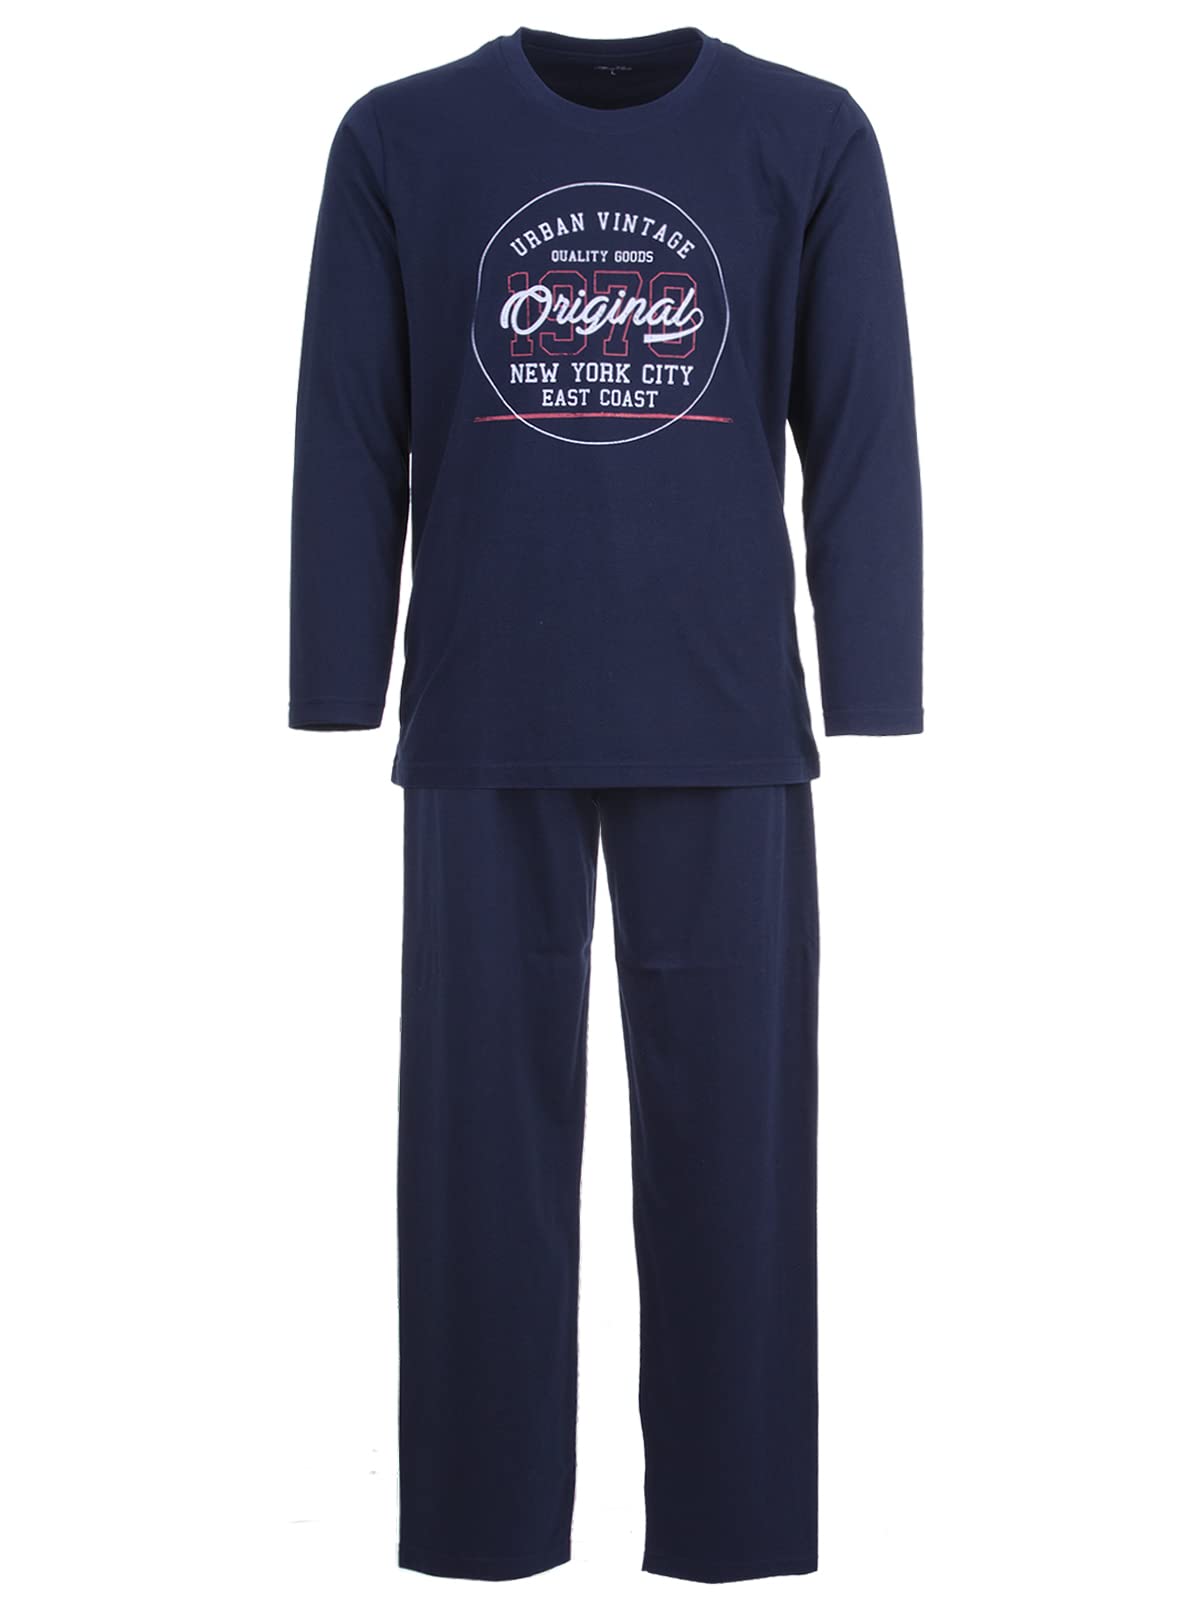 LUCKY Herren Pyjama lang Schlafanzug Pyjama Set Druck Motiv, Farbe:Navy, Größe:M